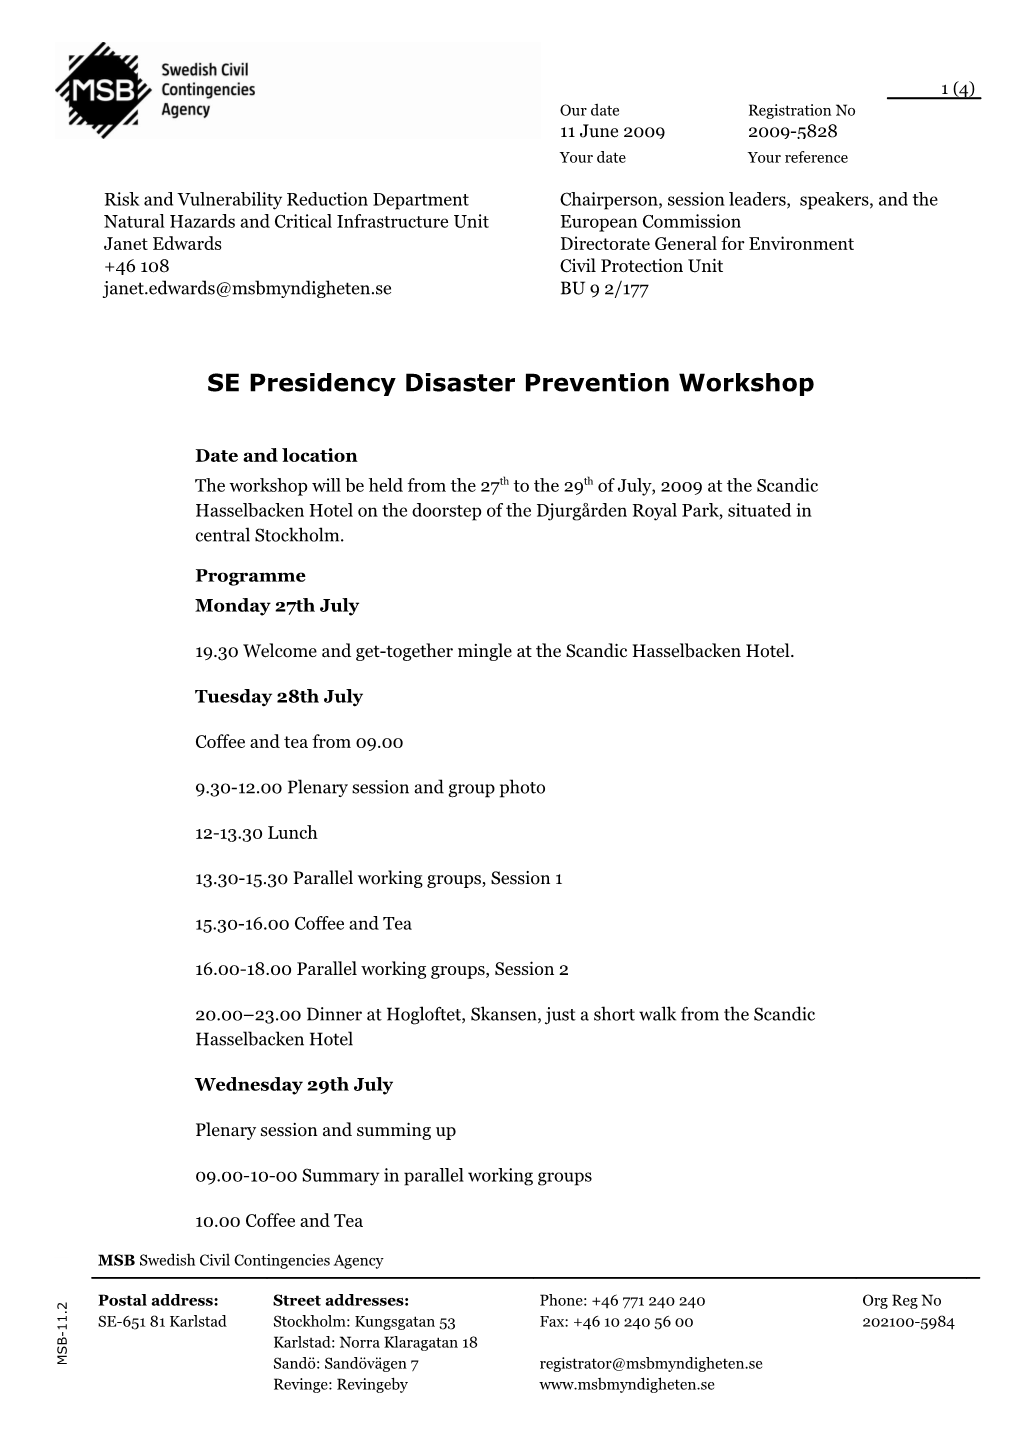 SE Presidency Disaster Prevention Workshop